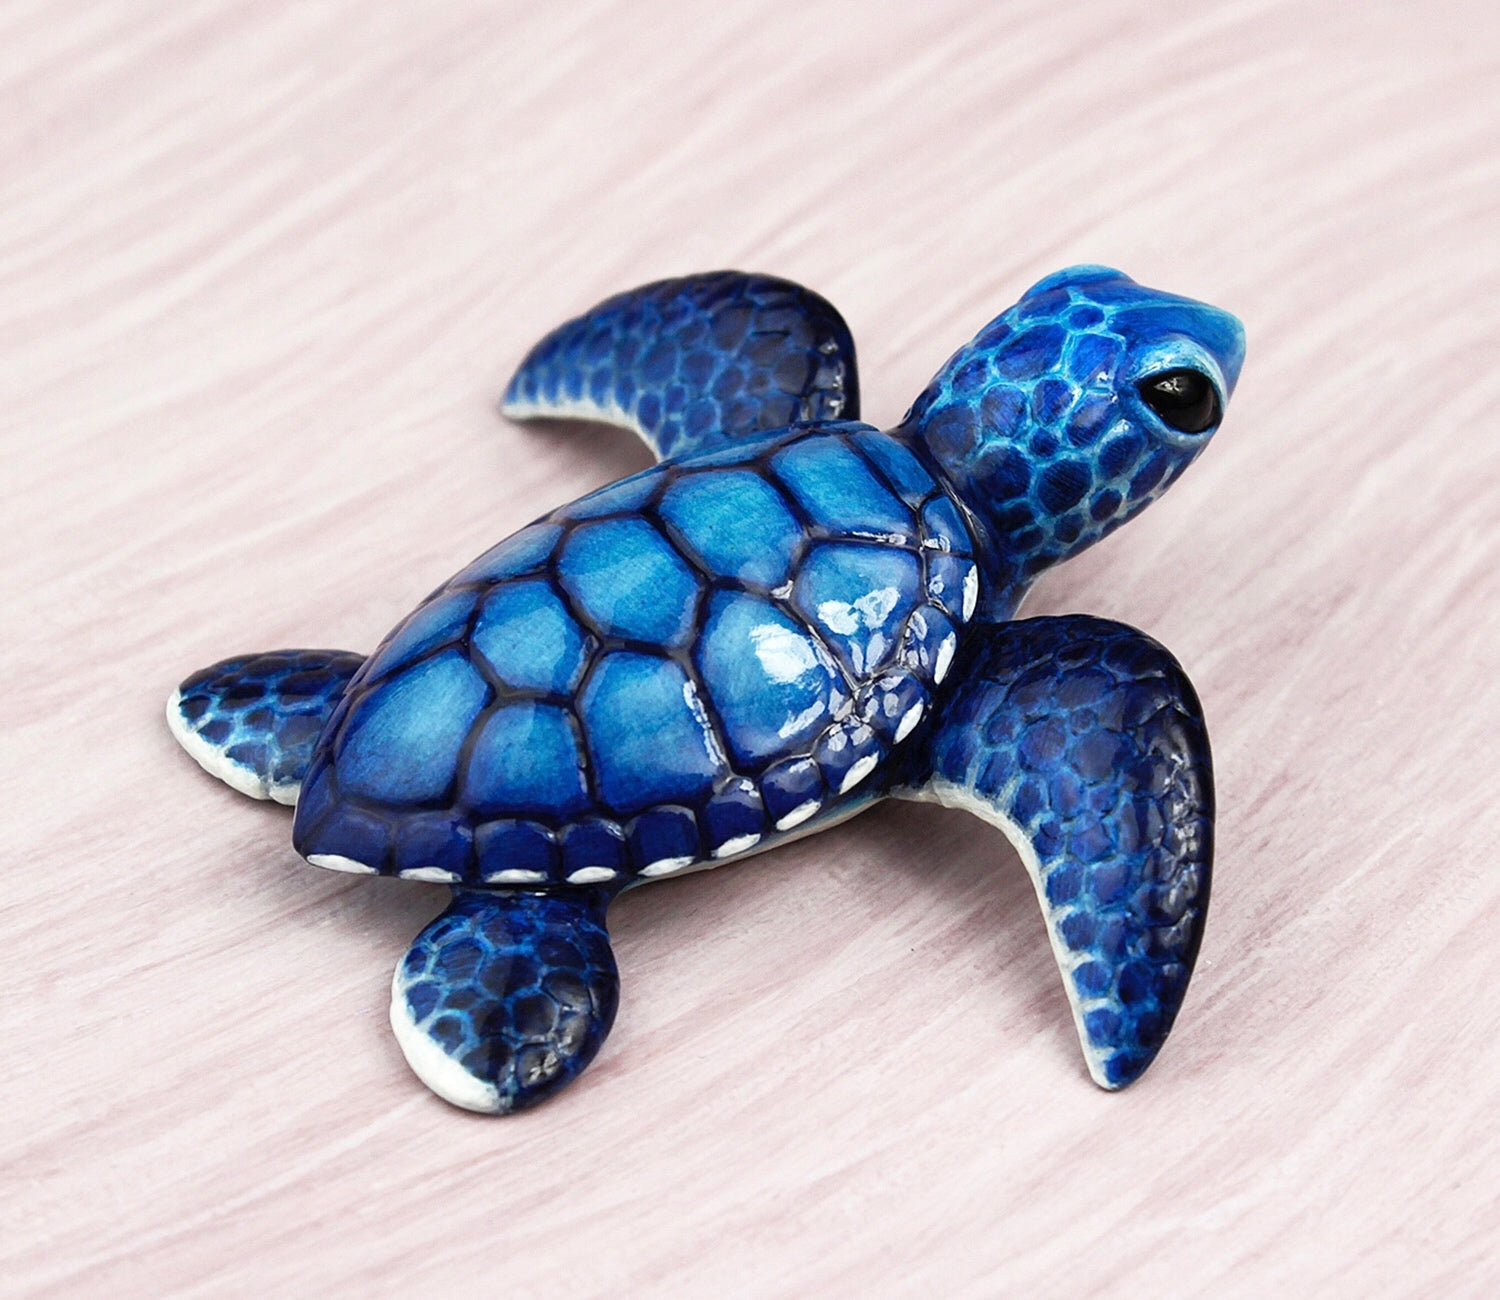 Blue turtle